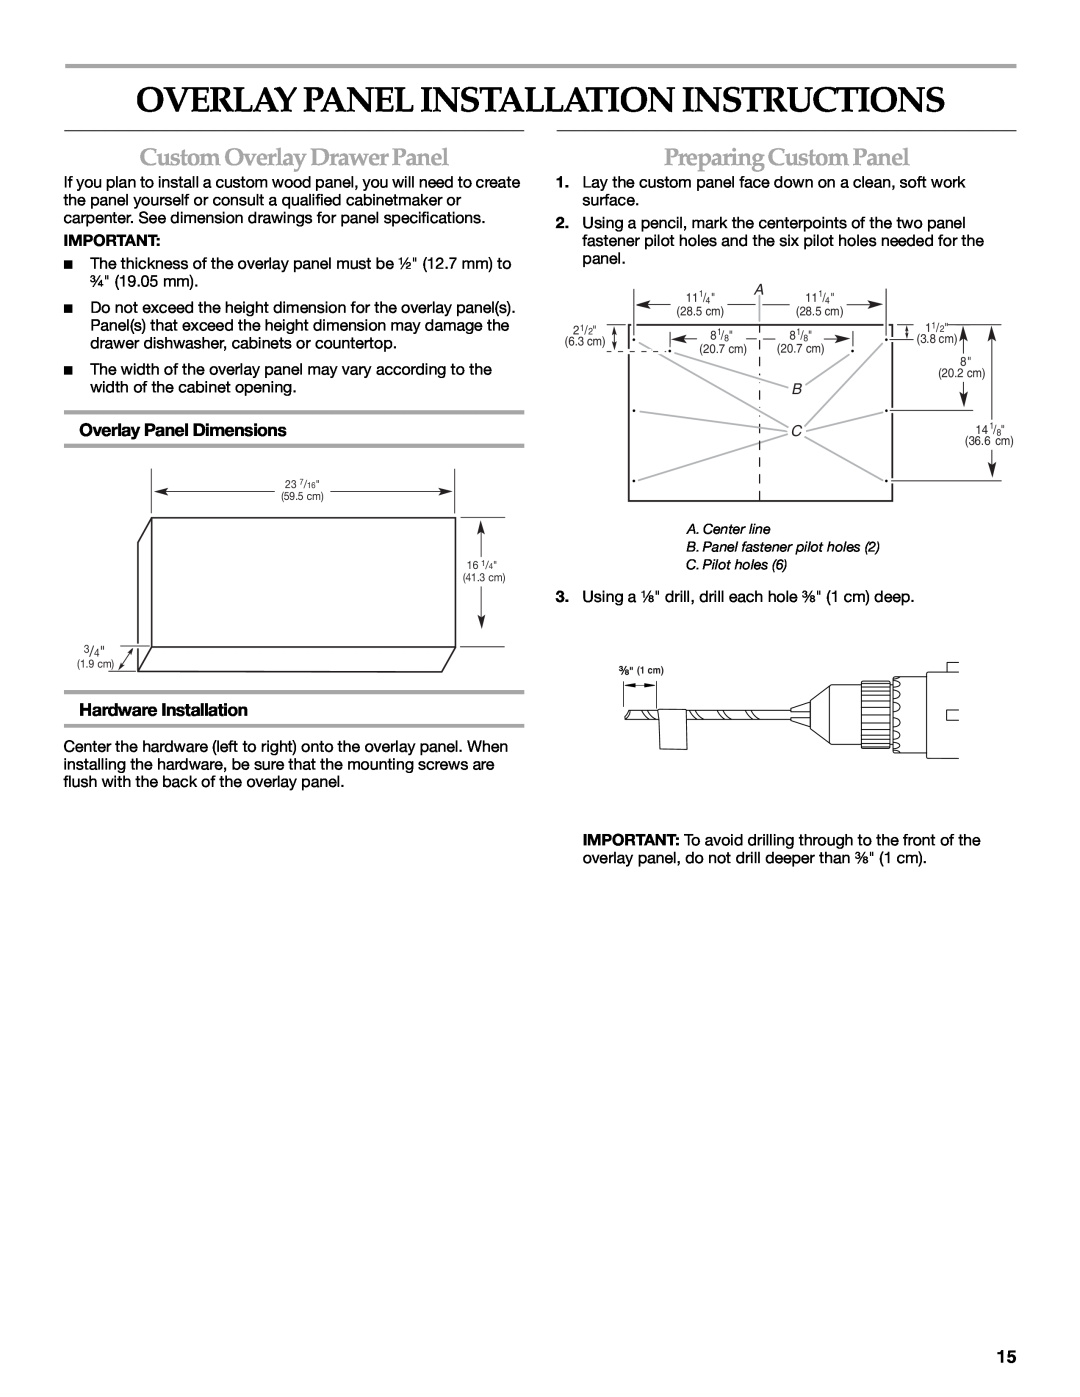 KitchenAid KUDD03STBL Overlay Panel Installation Instructions, Custom Overlay Drawer Panel, Preparing Custom Panel 